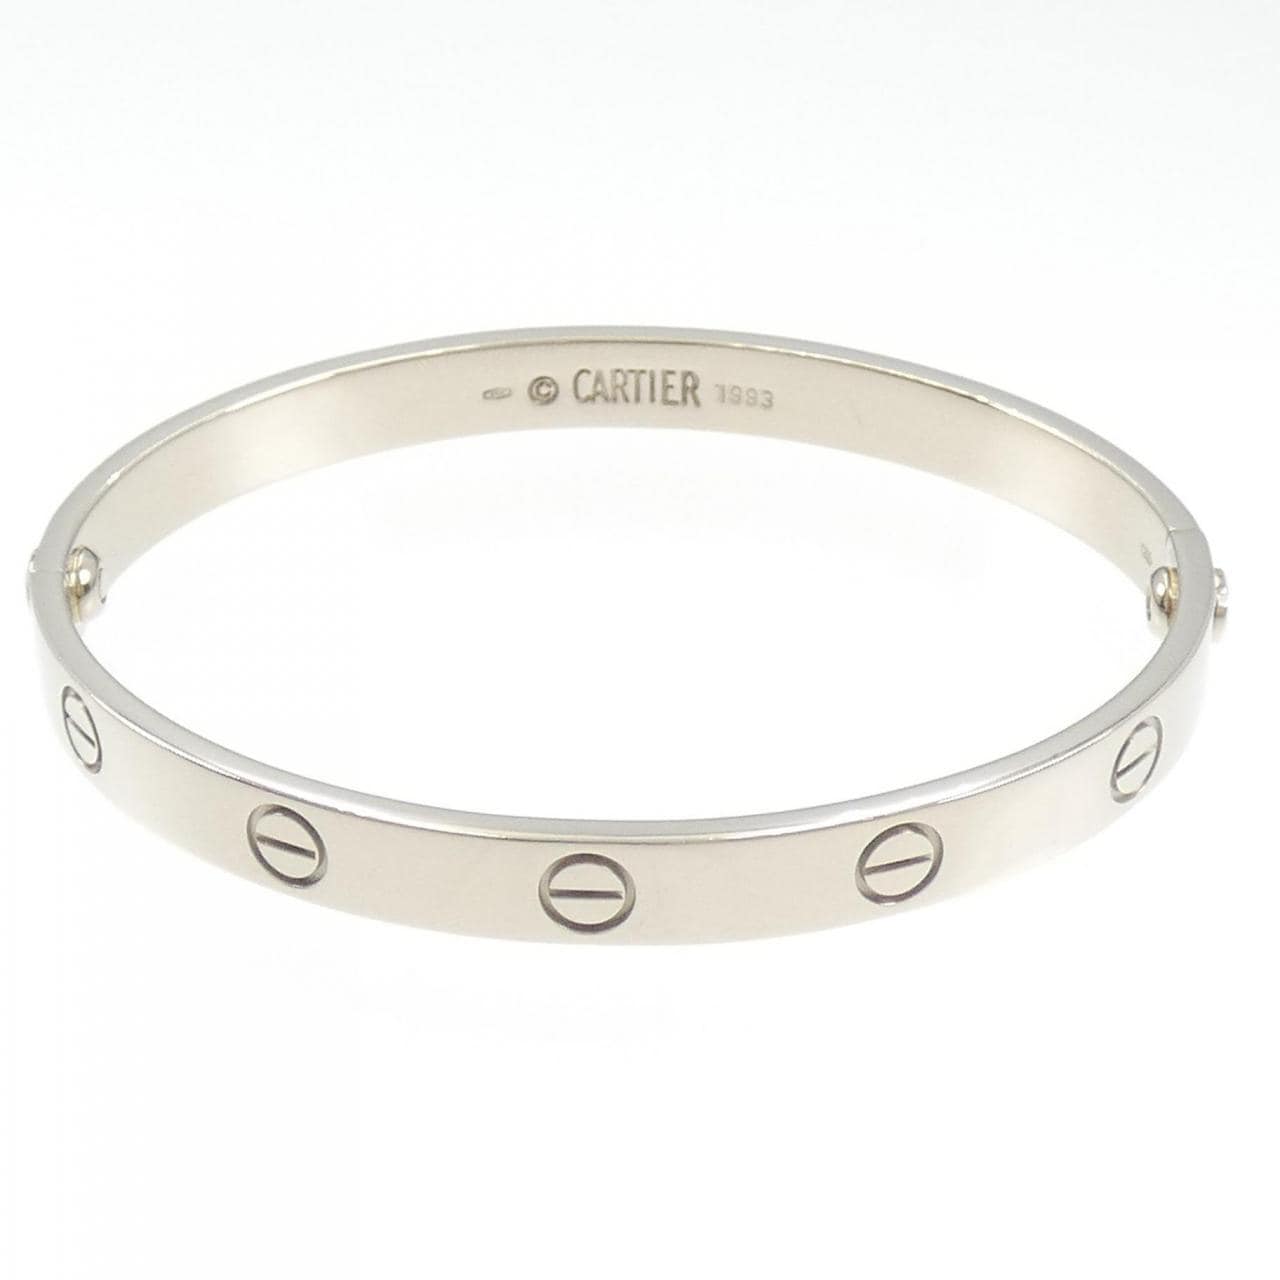 CARTIER LOVE bracelet